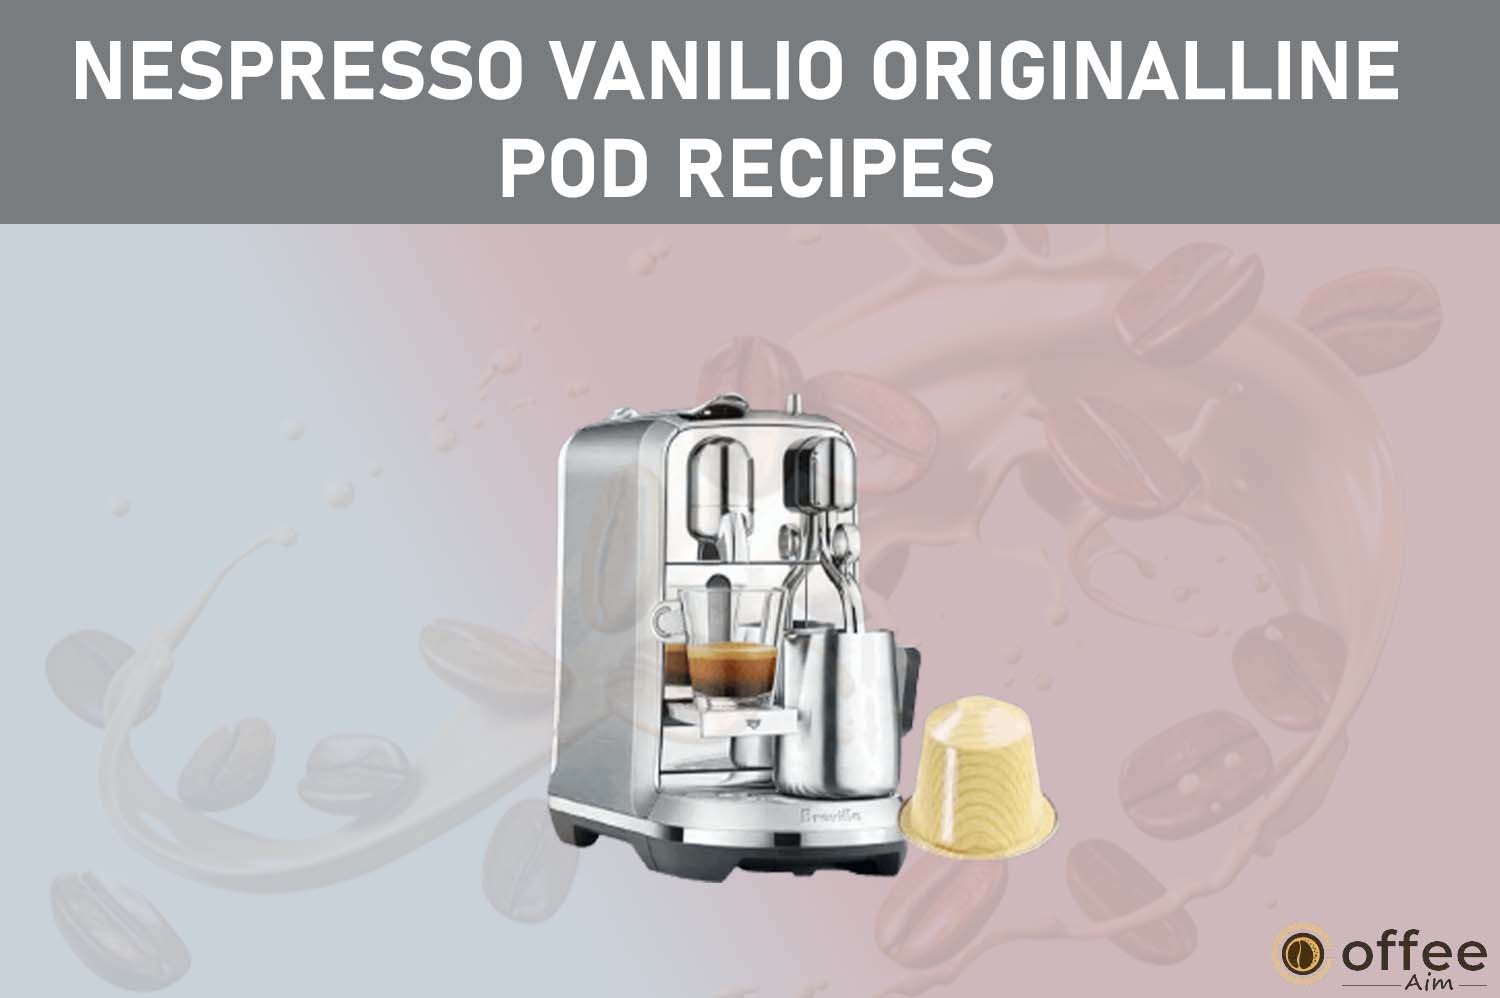 Featured image for the article "Nespresso Vanilio OriginalLine Pod Recipes"